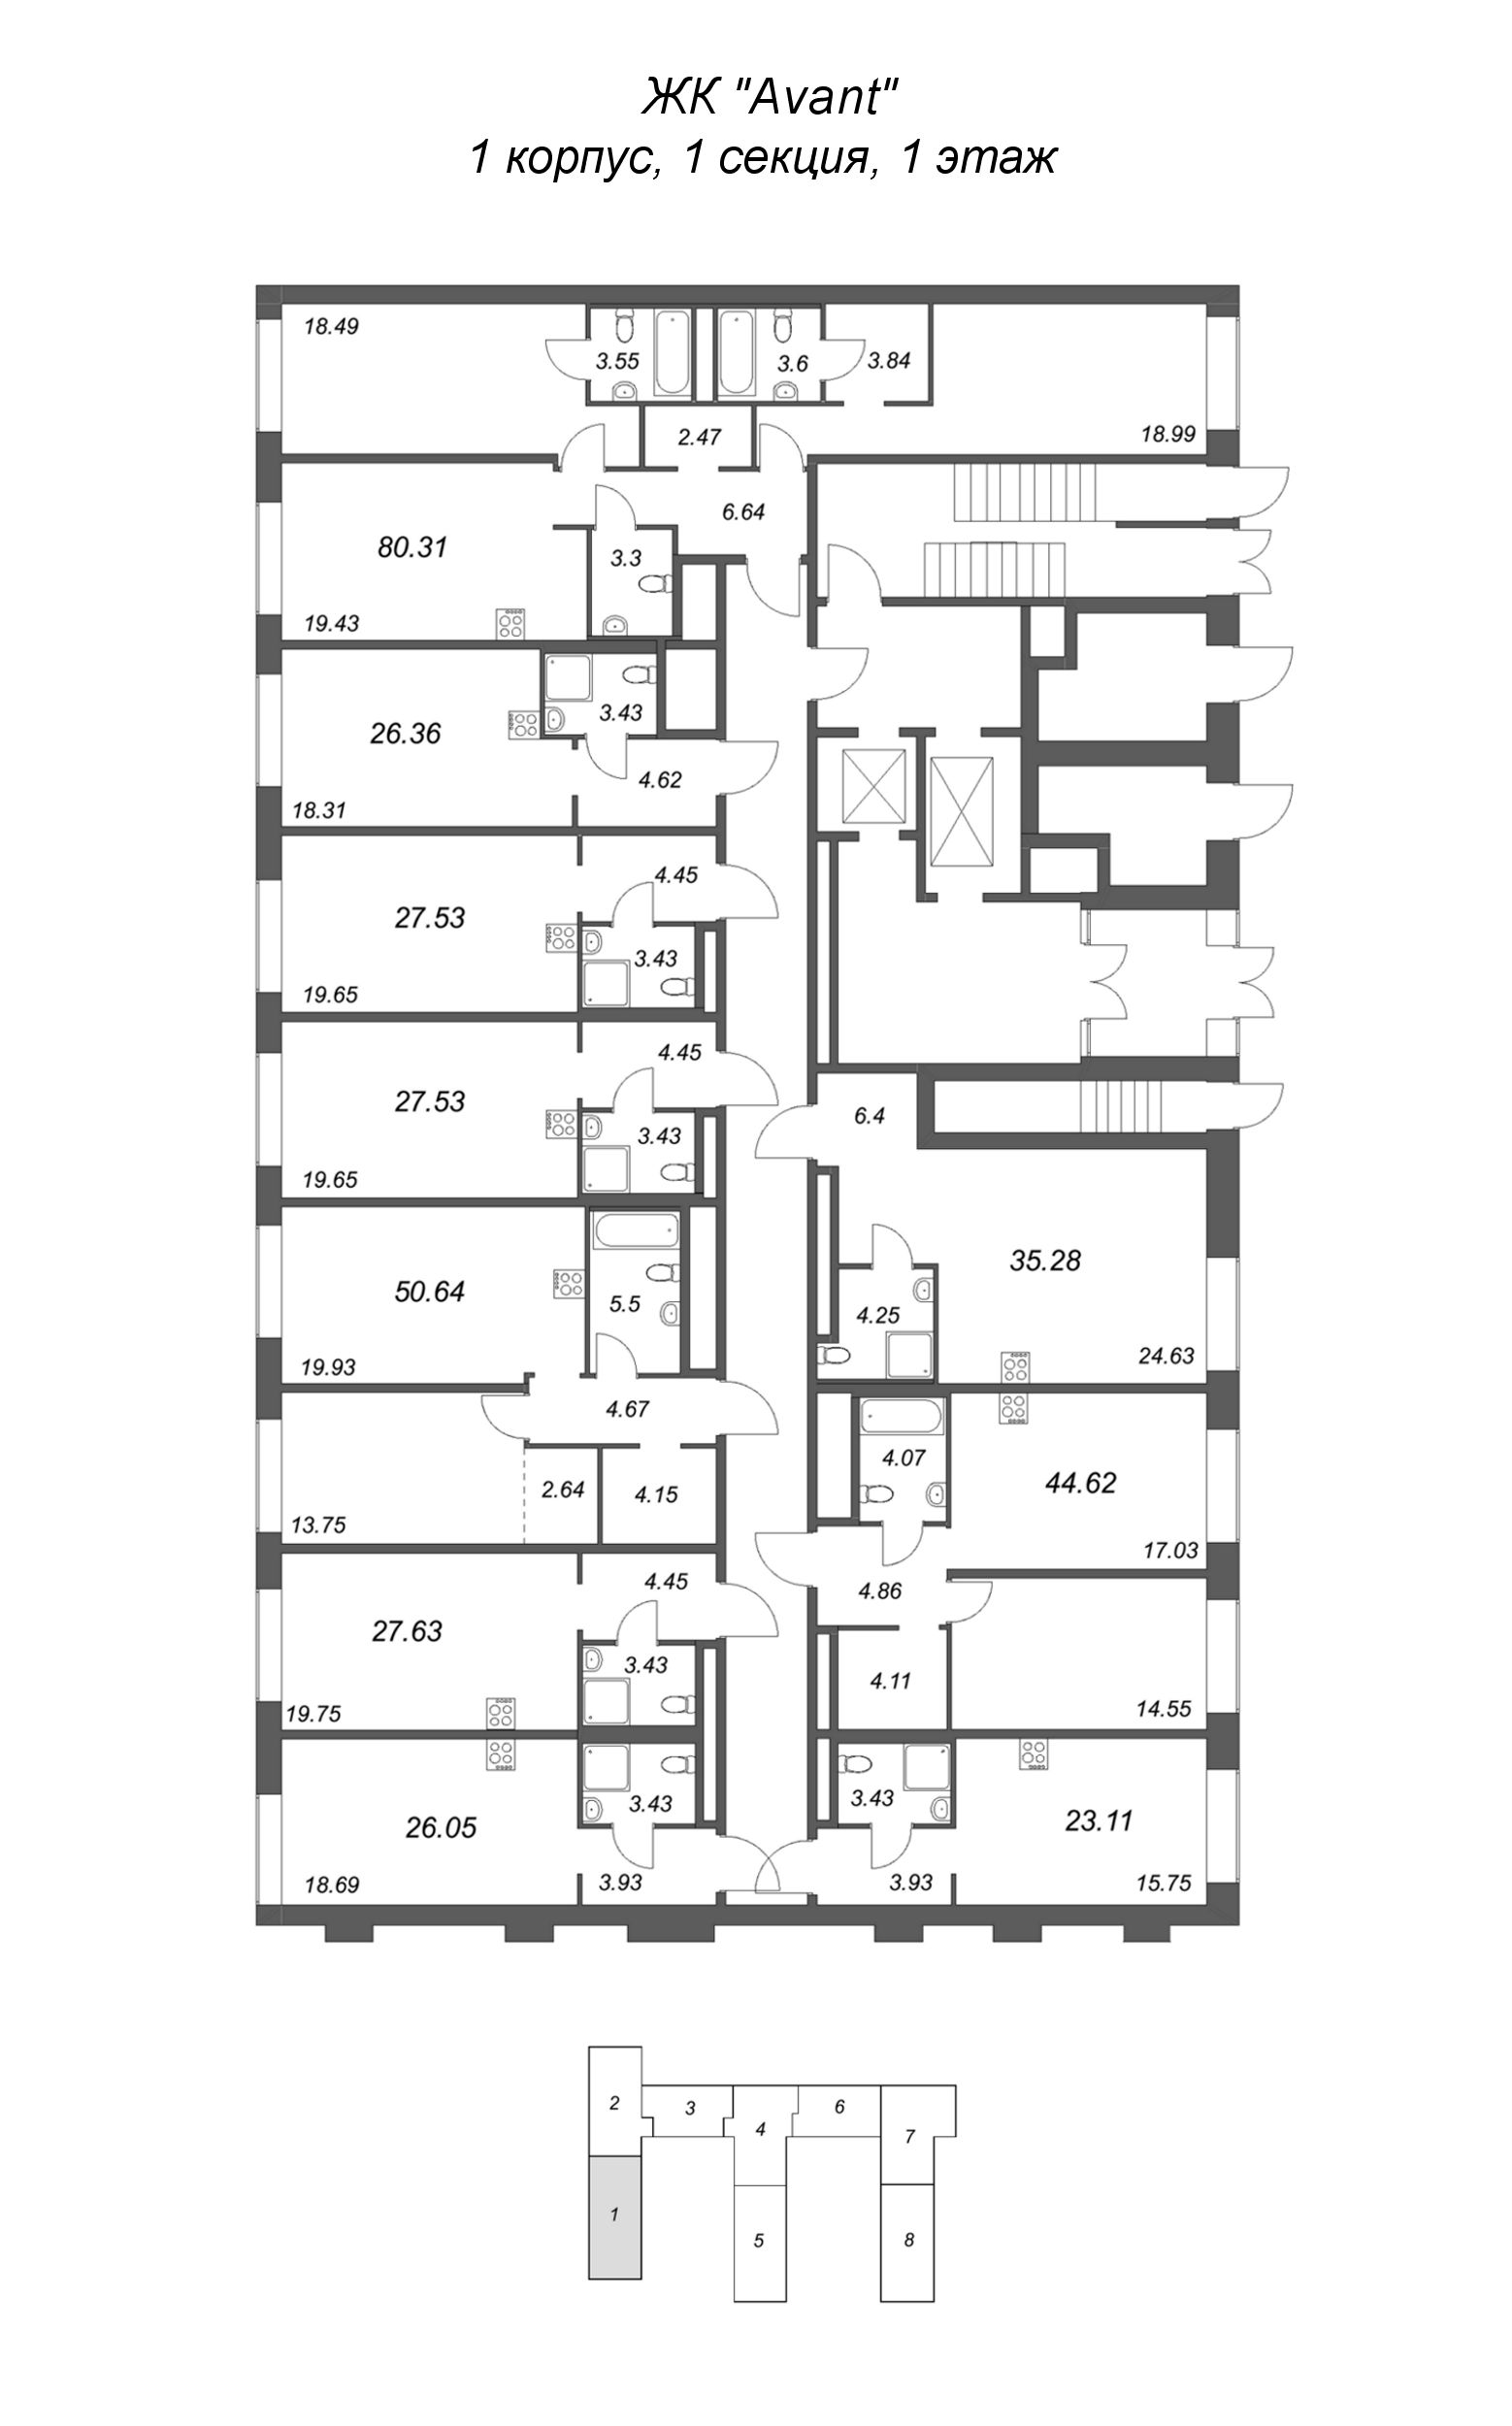 2-комнатная (Евро) квартира, 44.62 м² - планировка этажа